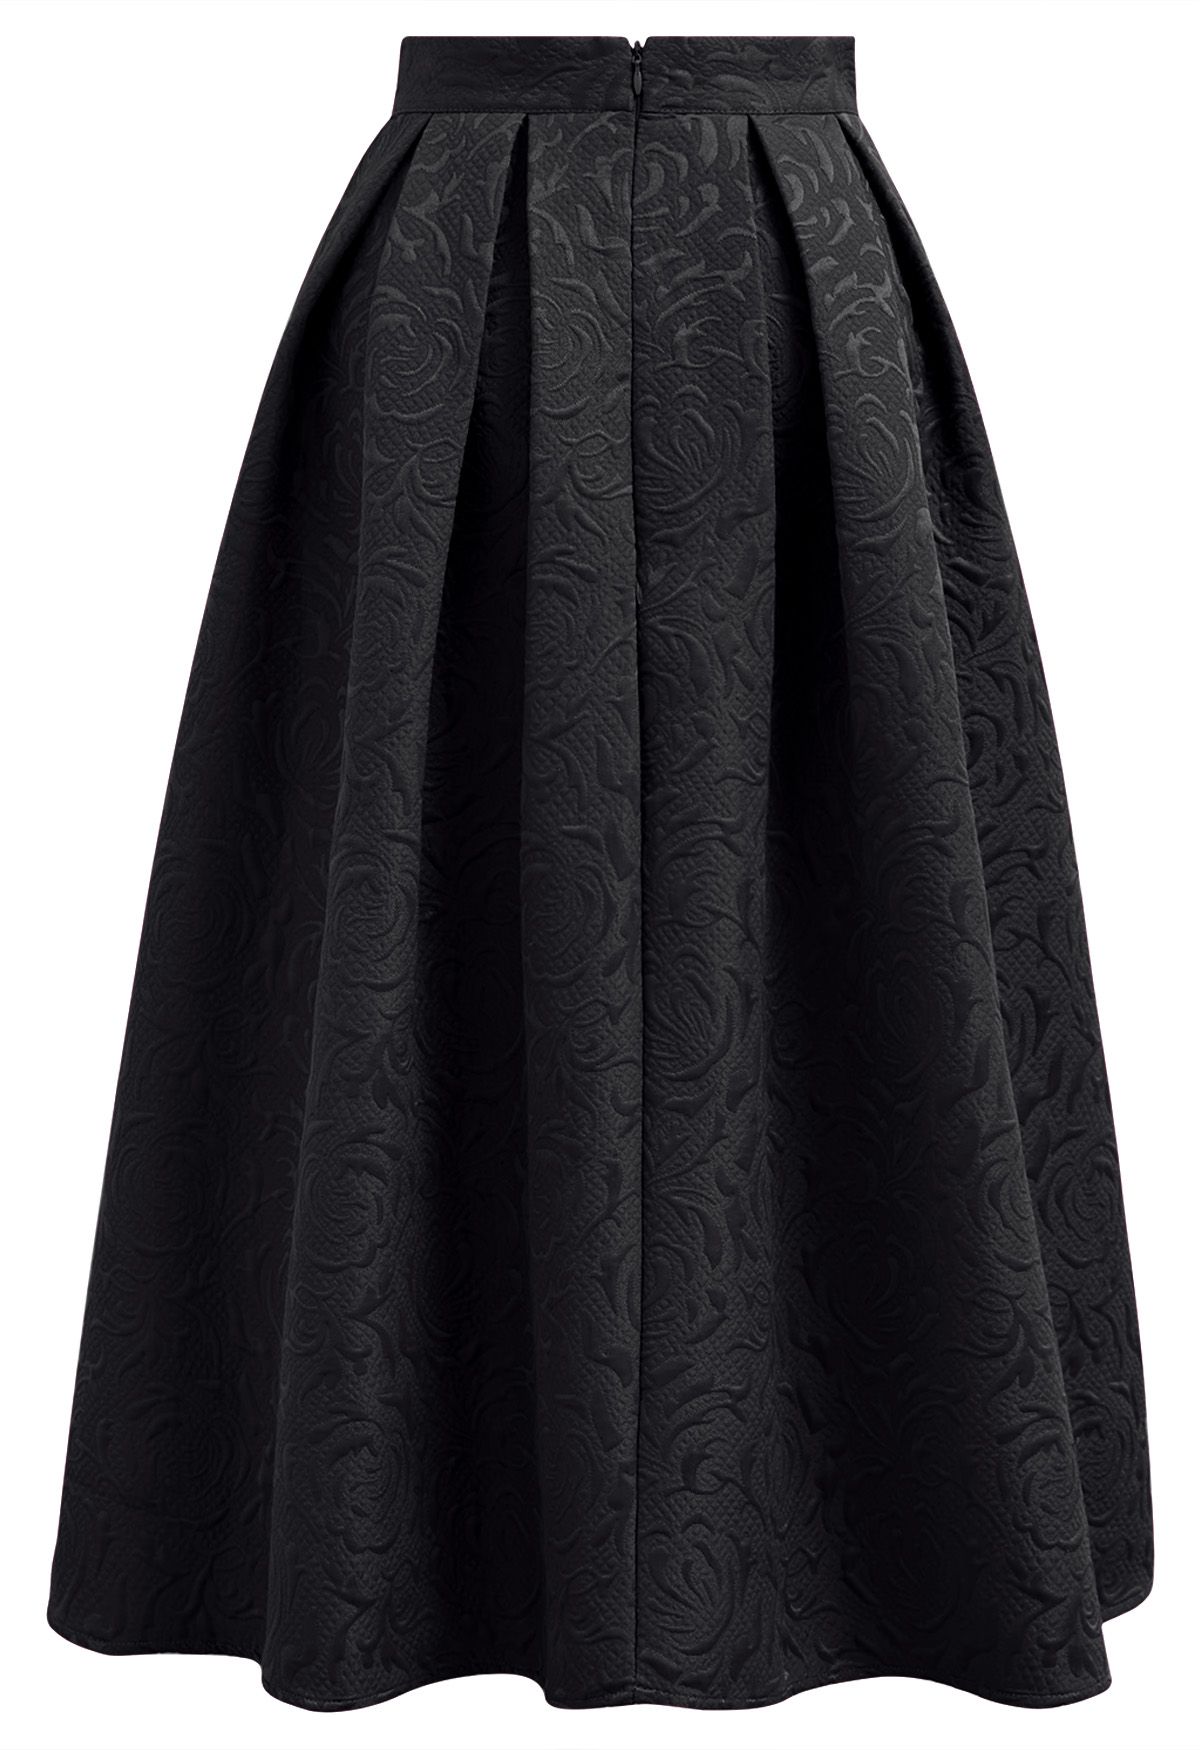 Embossed Floral Pleated Flare Midi Skirt in Black